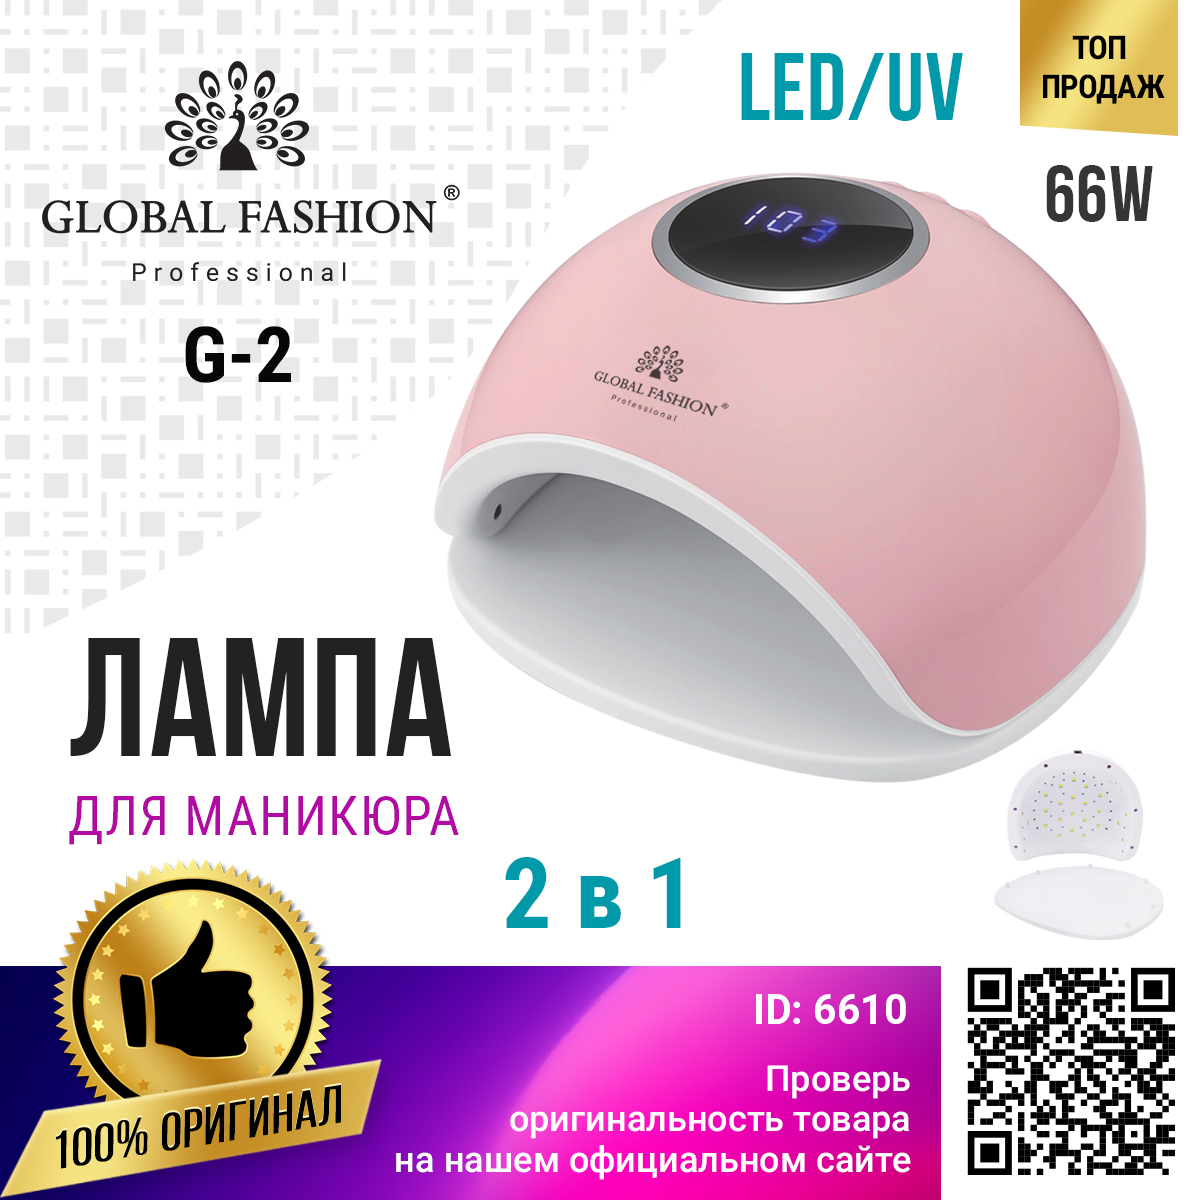 Купить лампу Global Fashion G-2 66W для наращивания ногтей в России